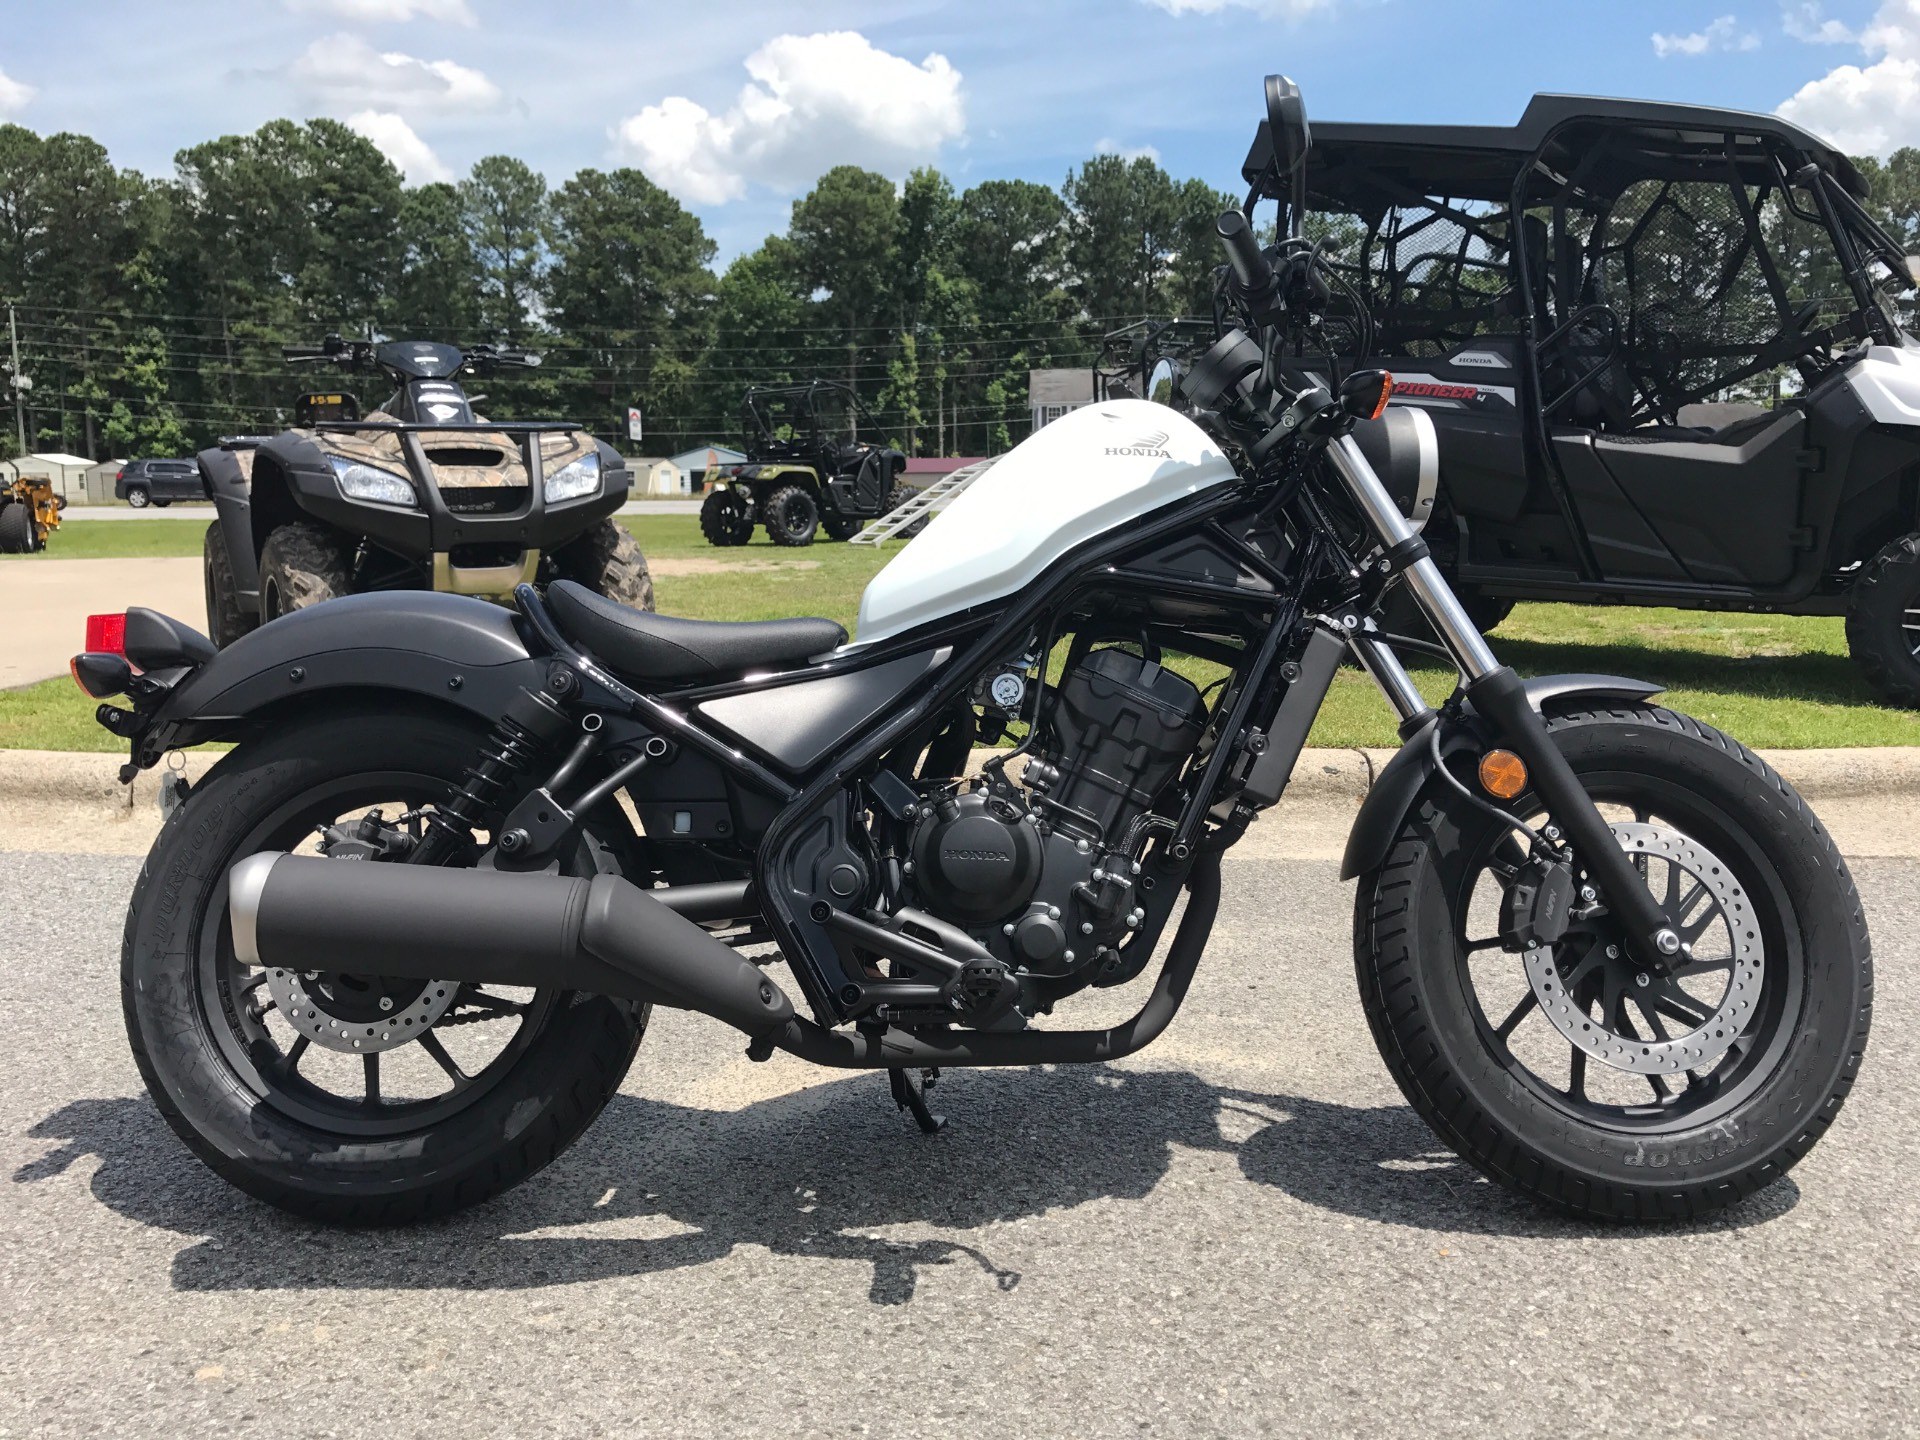 New 2017 Honda Rebel 300 Motorcycles in Greenville, NC | Stock Number: N/A